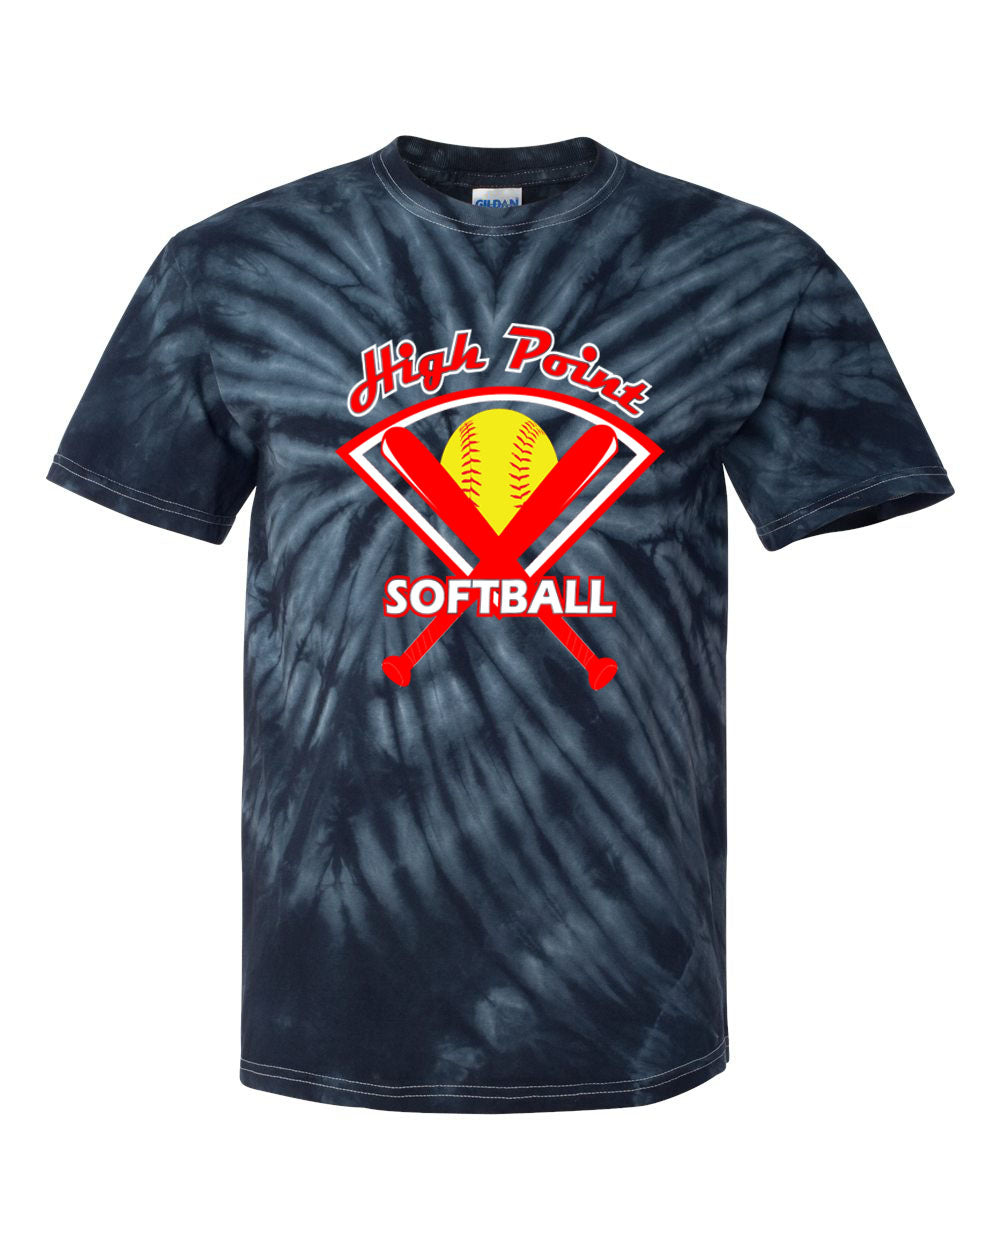 High Point Softball Tie Dye t-shirt Design 4